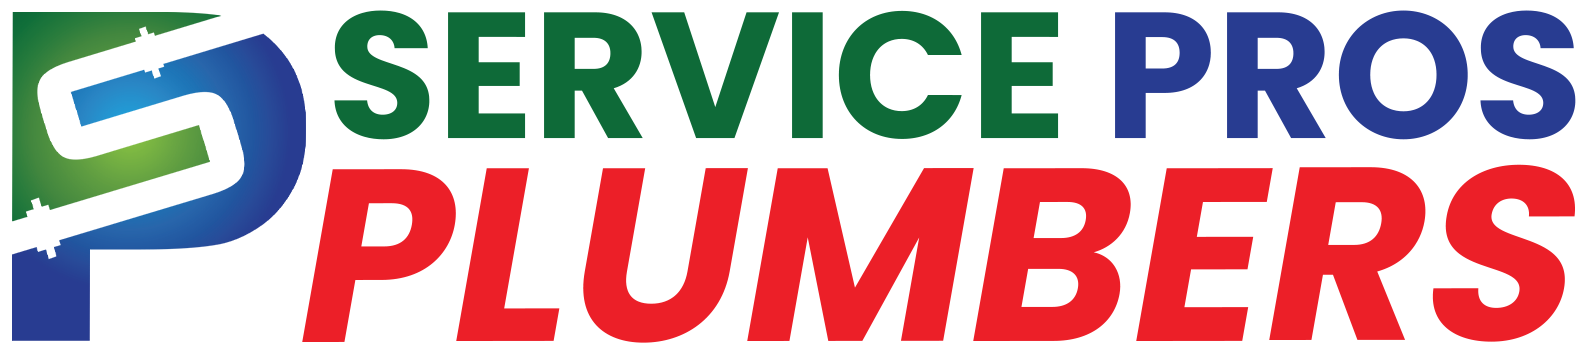 service pros plumbers logo